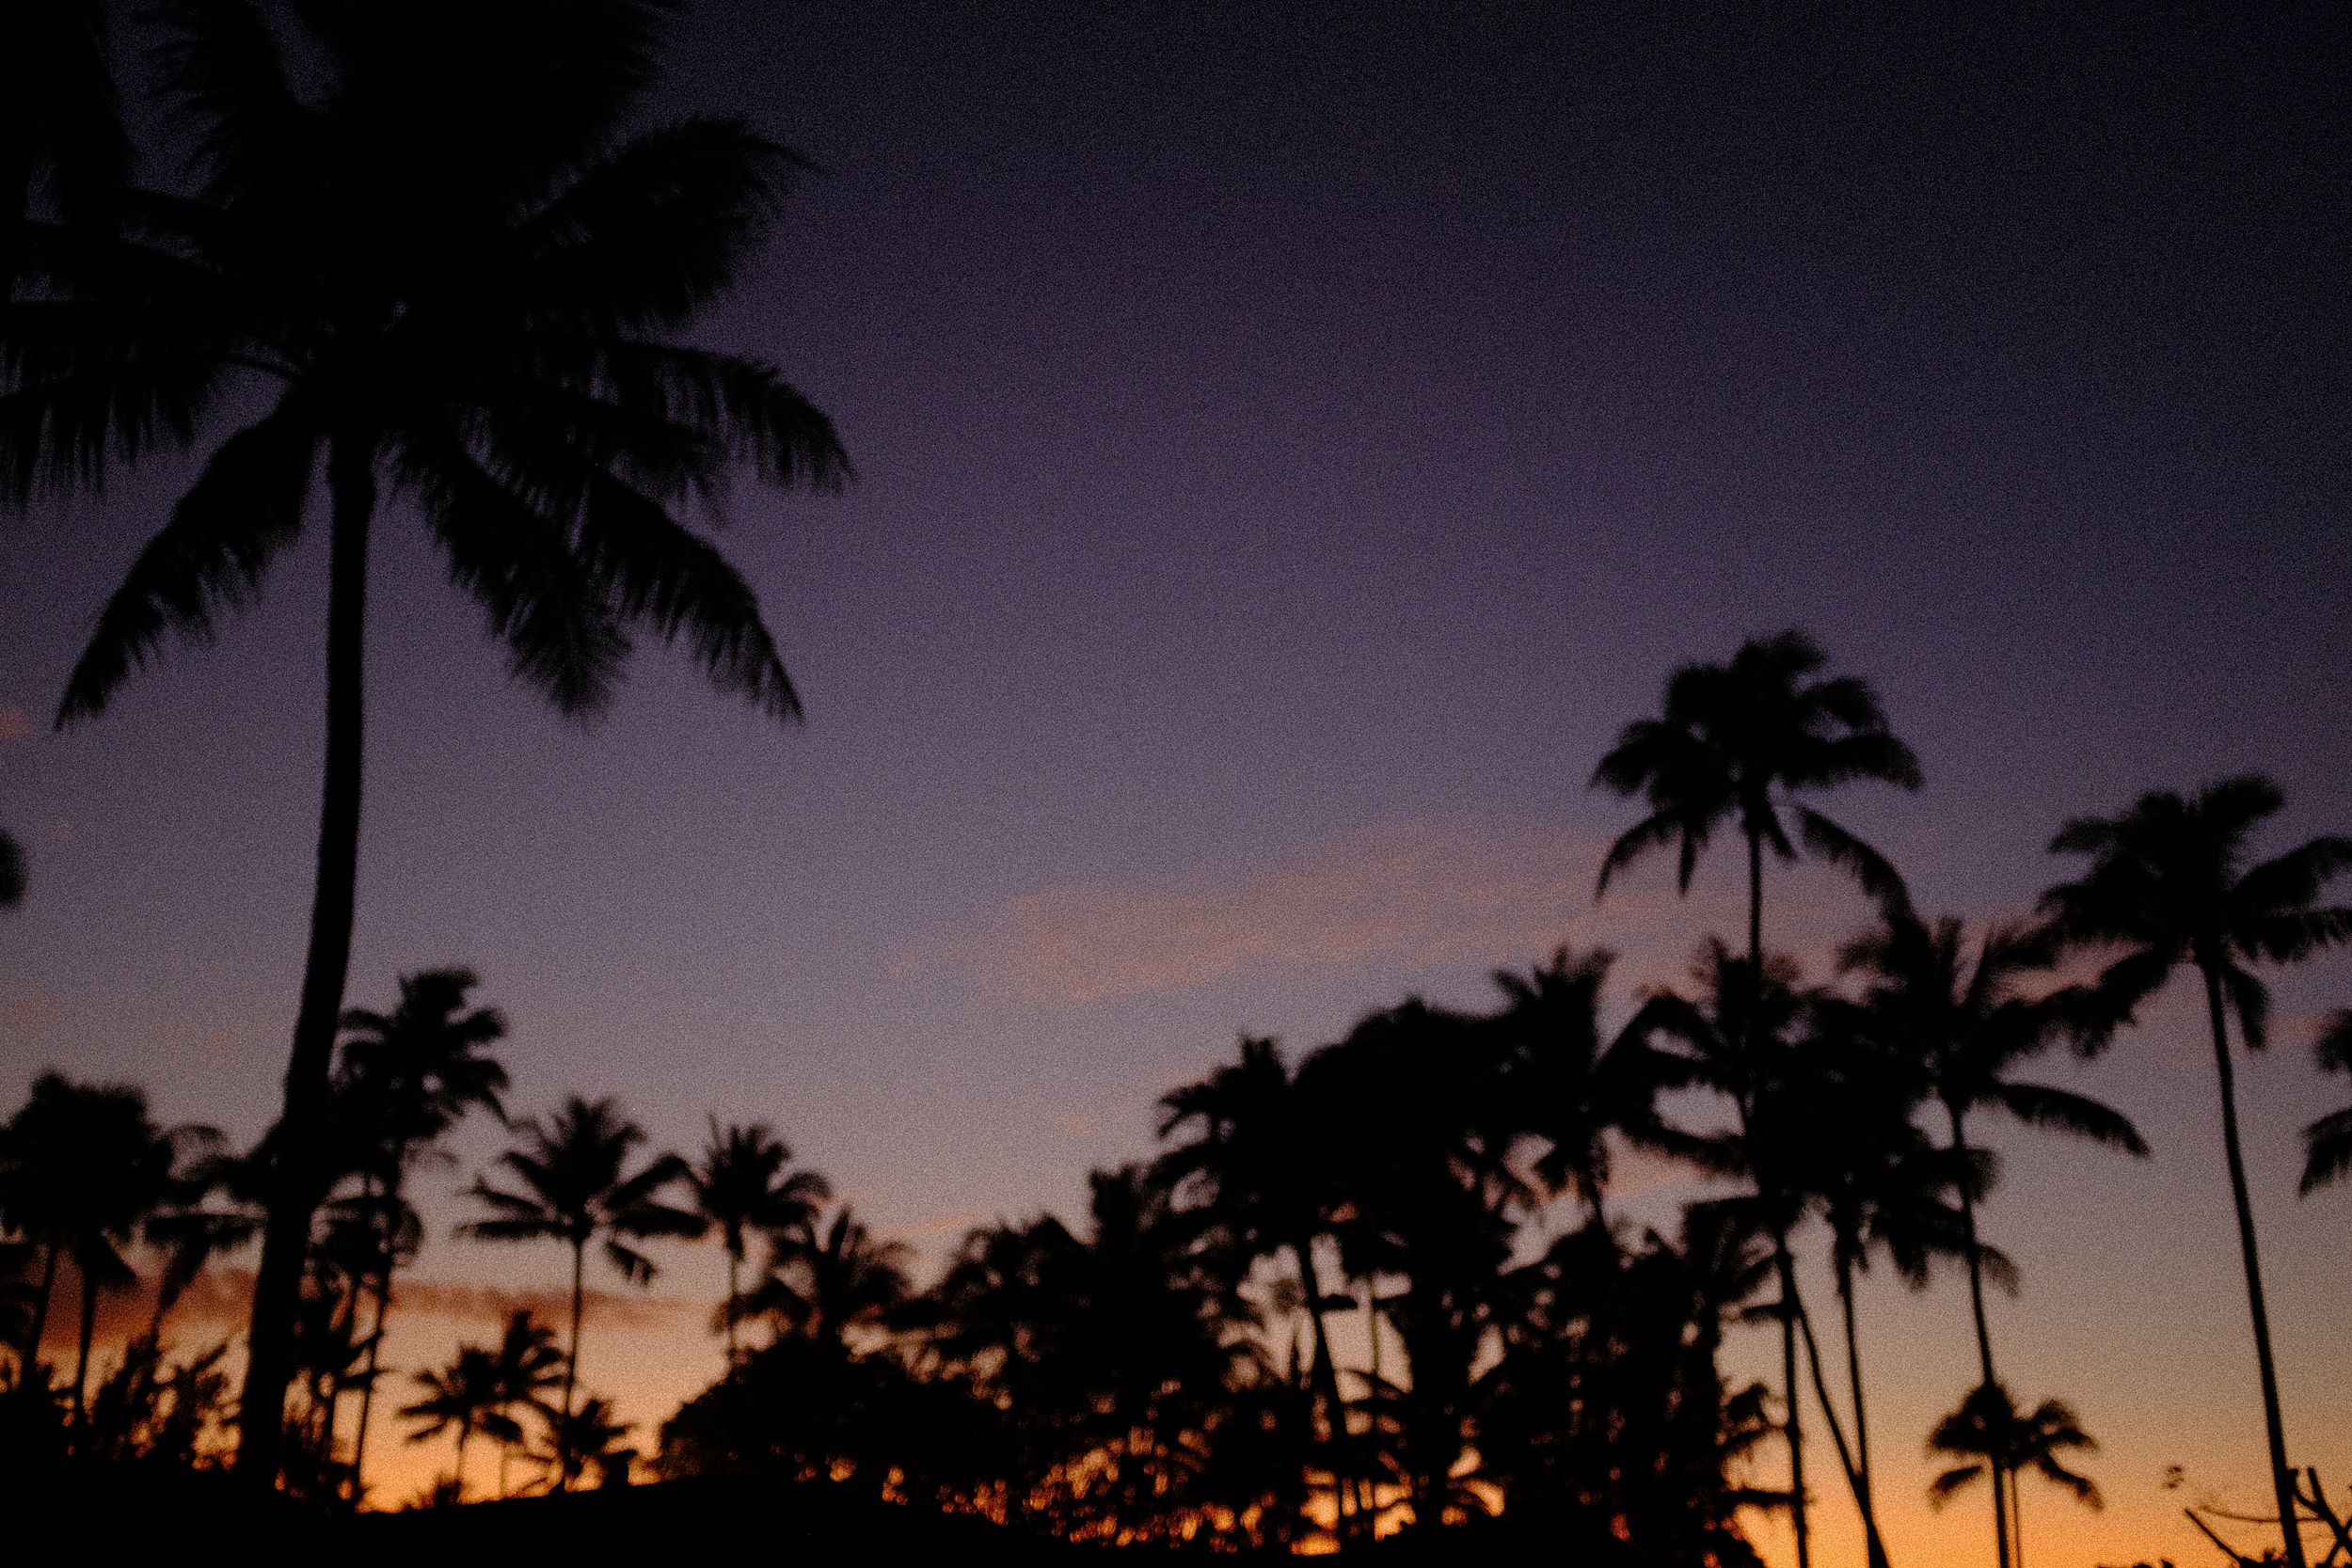  Our Hawaii Life - December & January Journal 